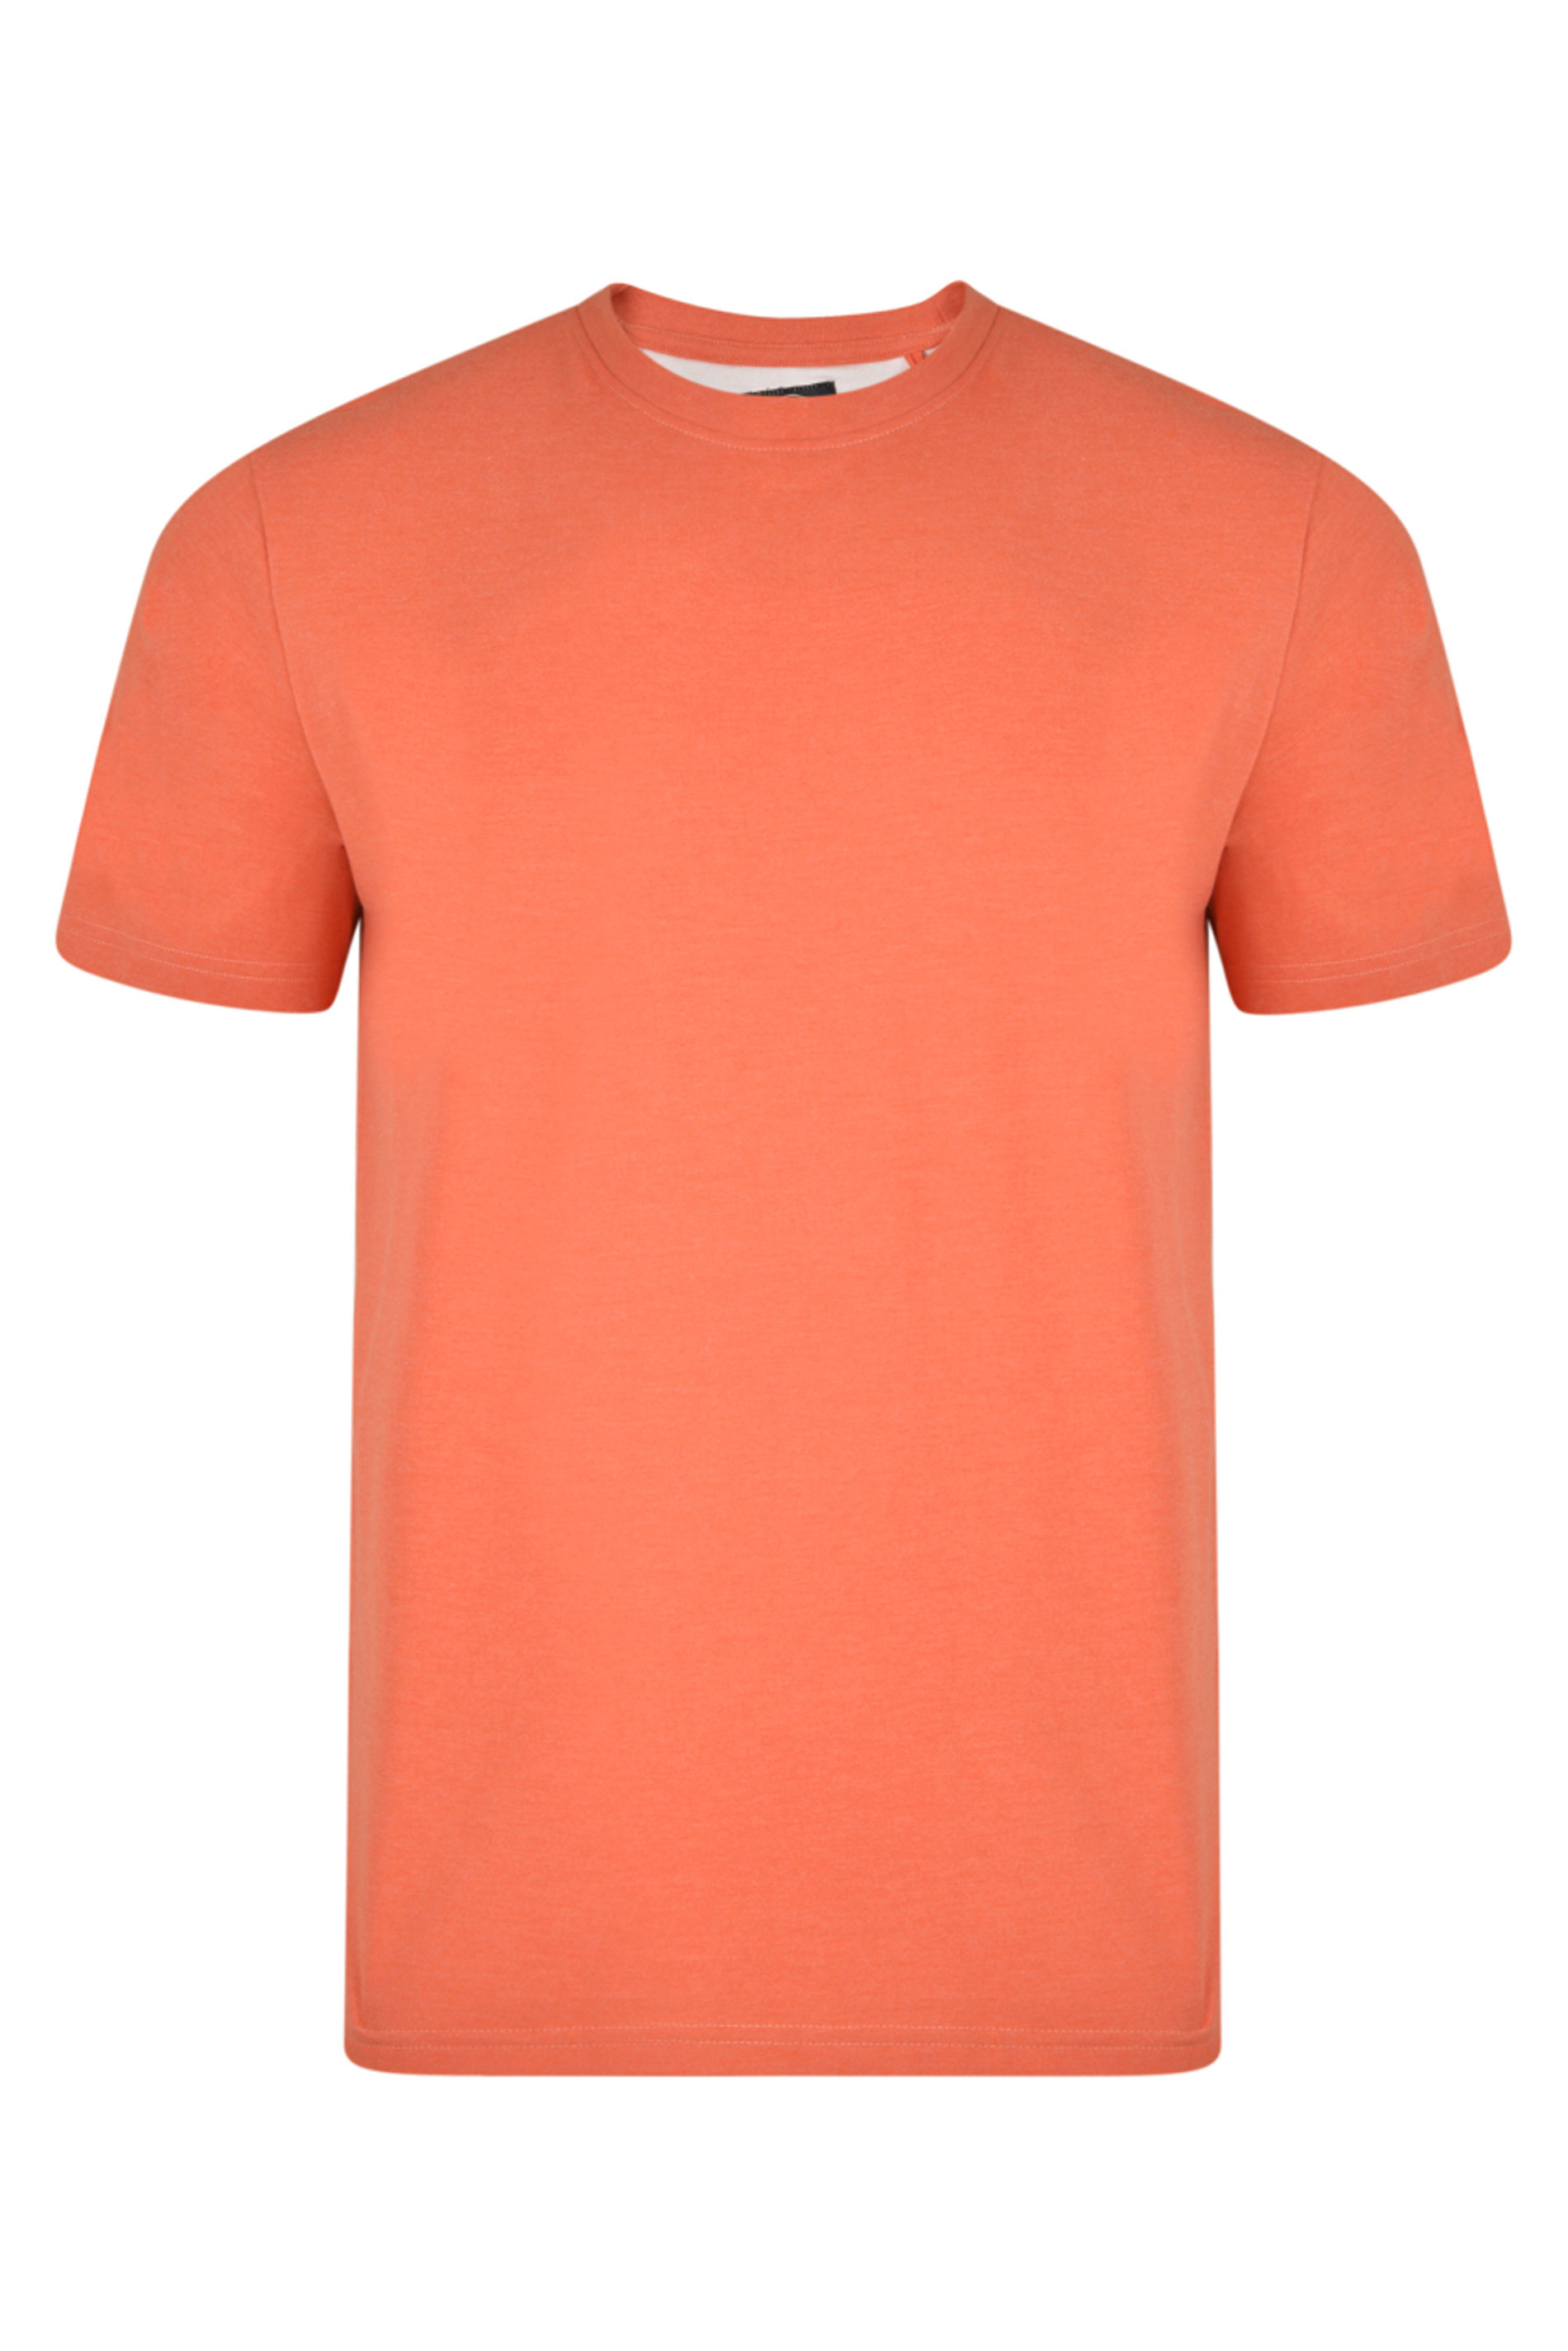 KAM Orange Plain T-Shirt | BadRhino 2